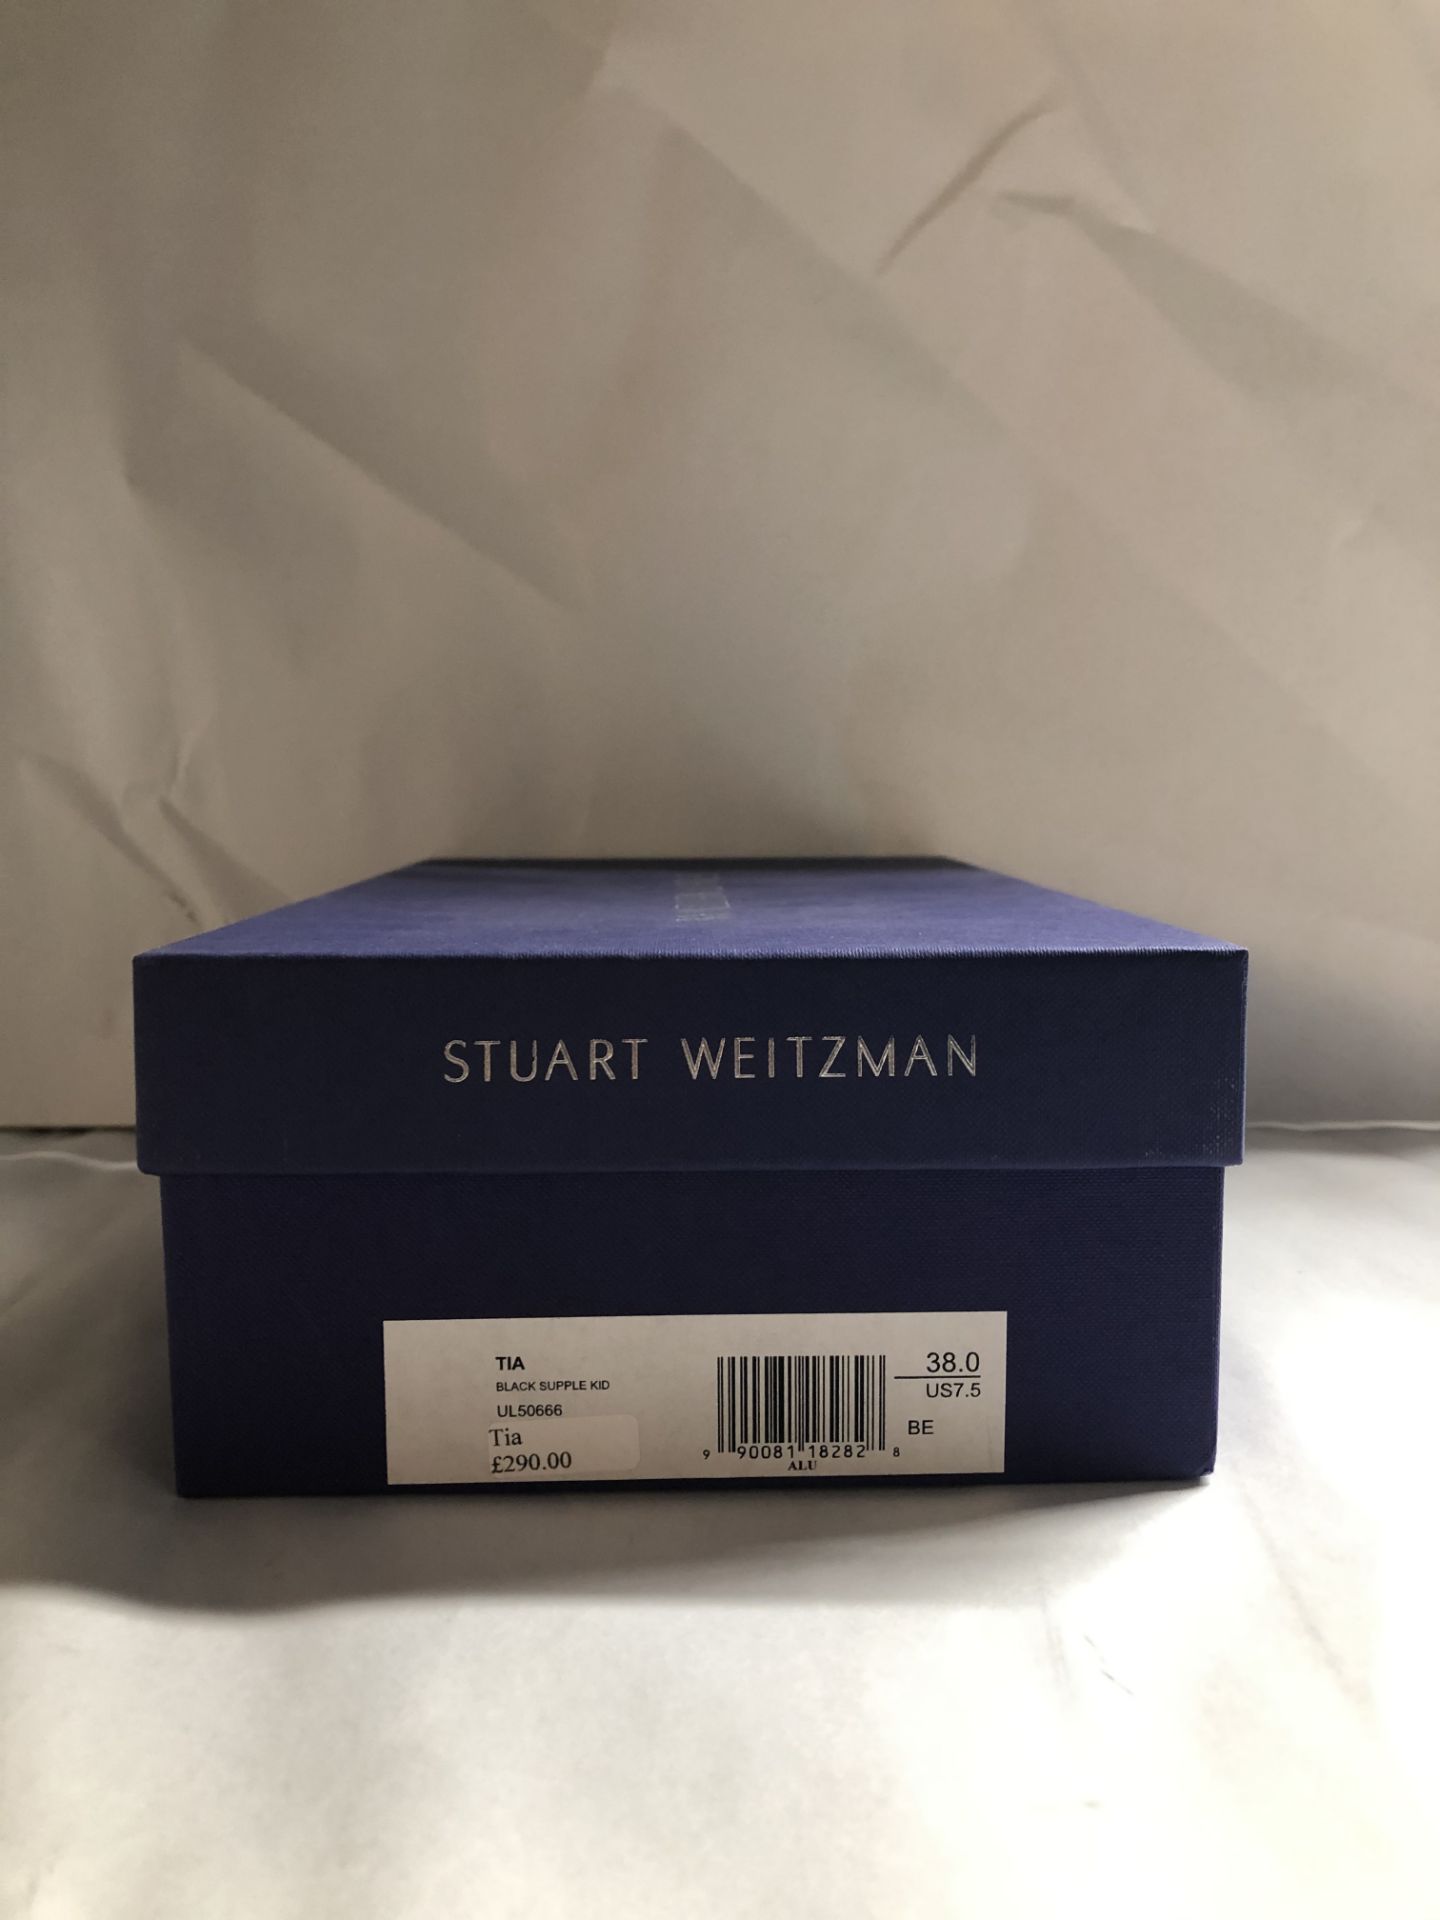 Stuart Weitzman Tia Black Supple Kid Heels. EU 38 RRP £290.00 - Image 2 of 2